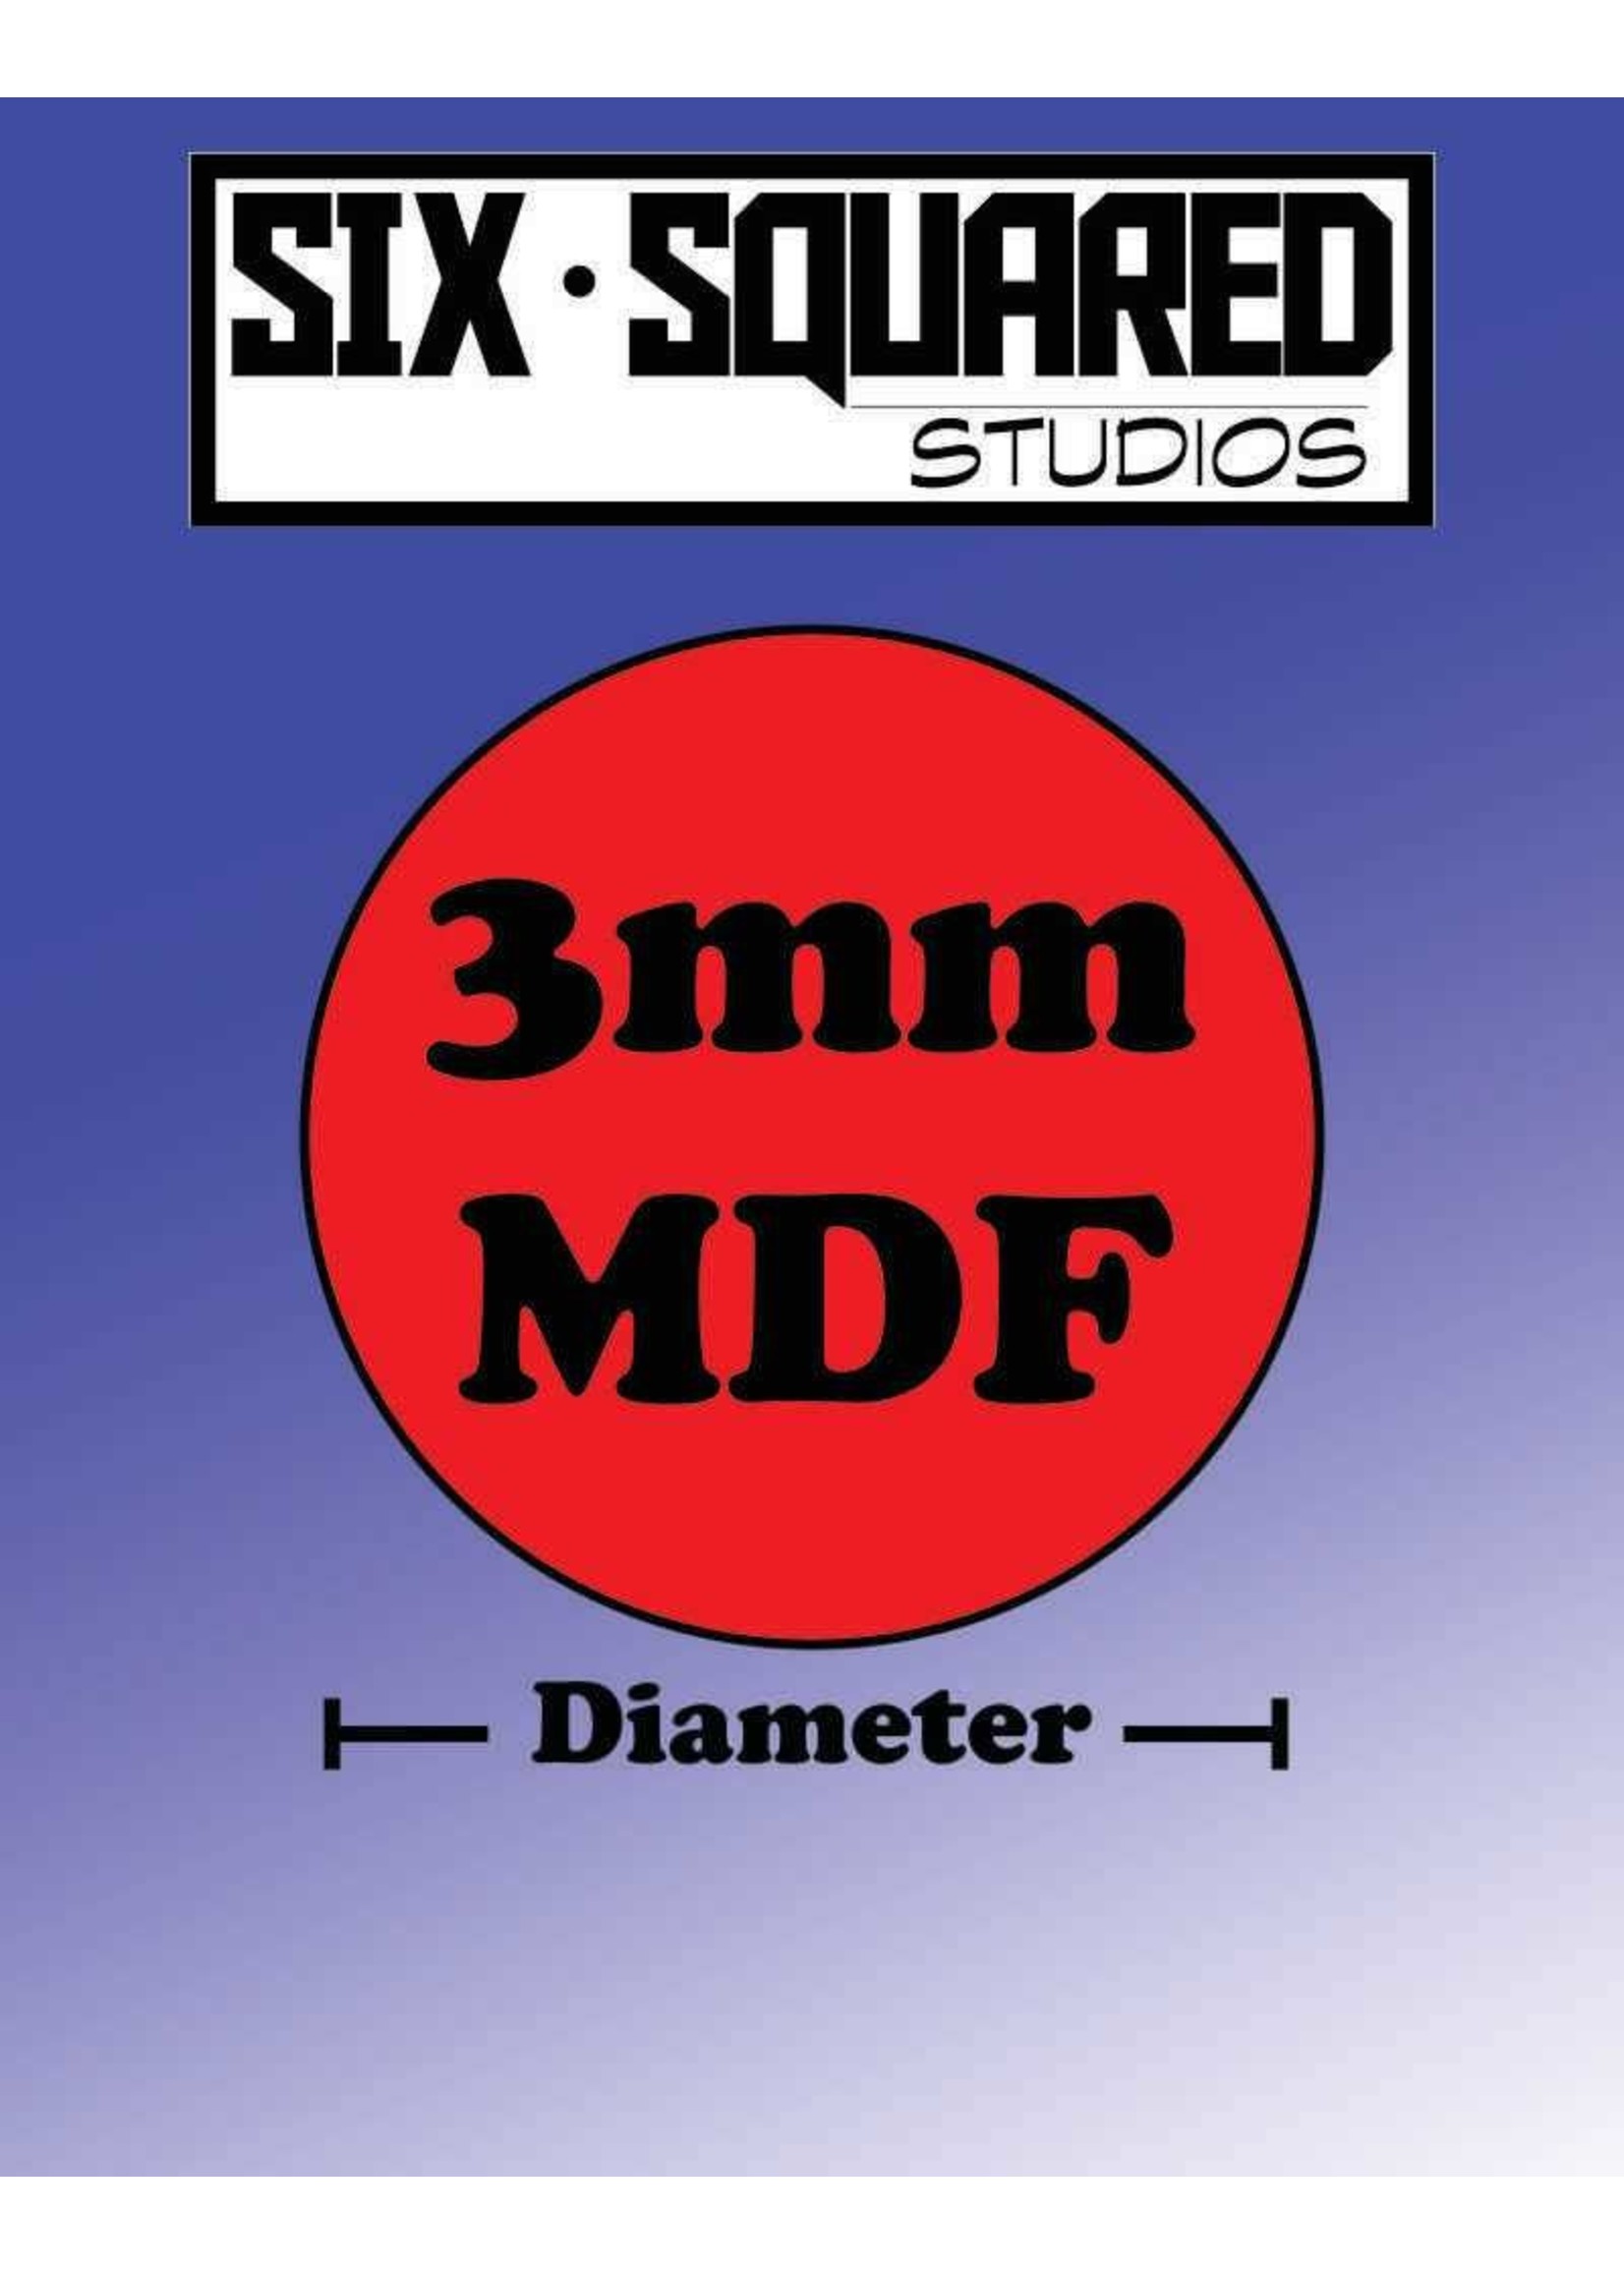 6 Squared Studios 60mm MDF round bases